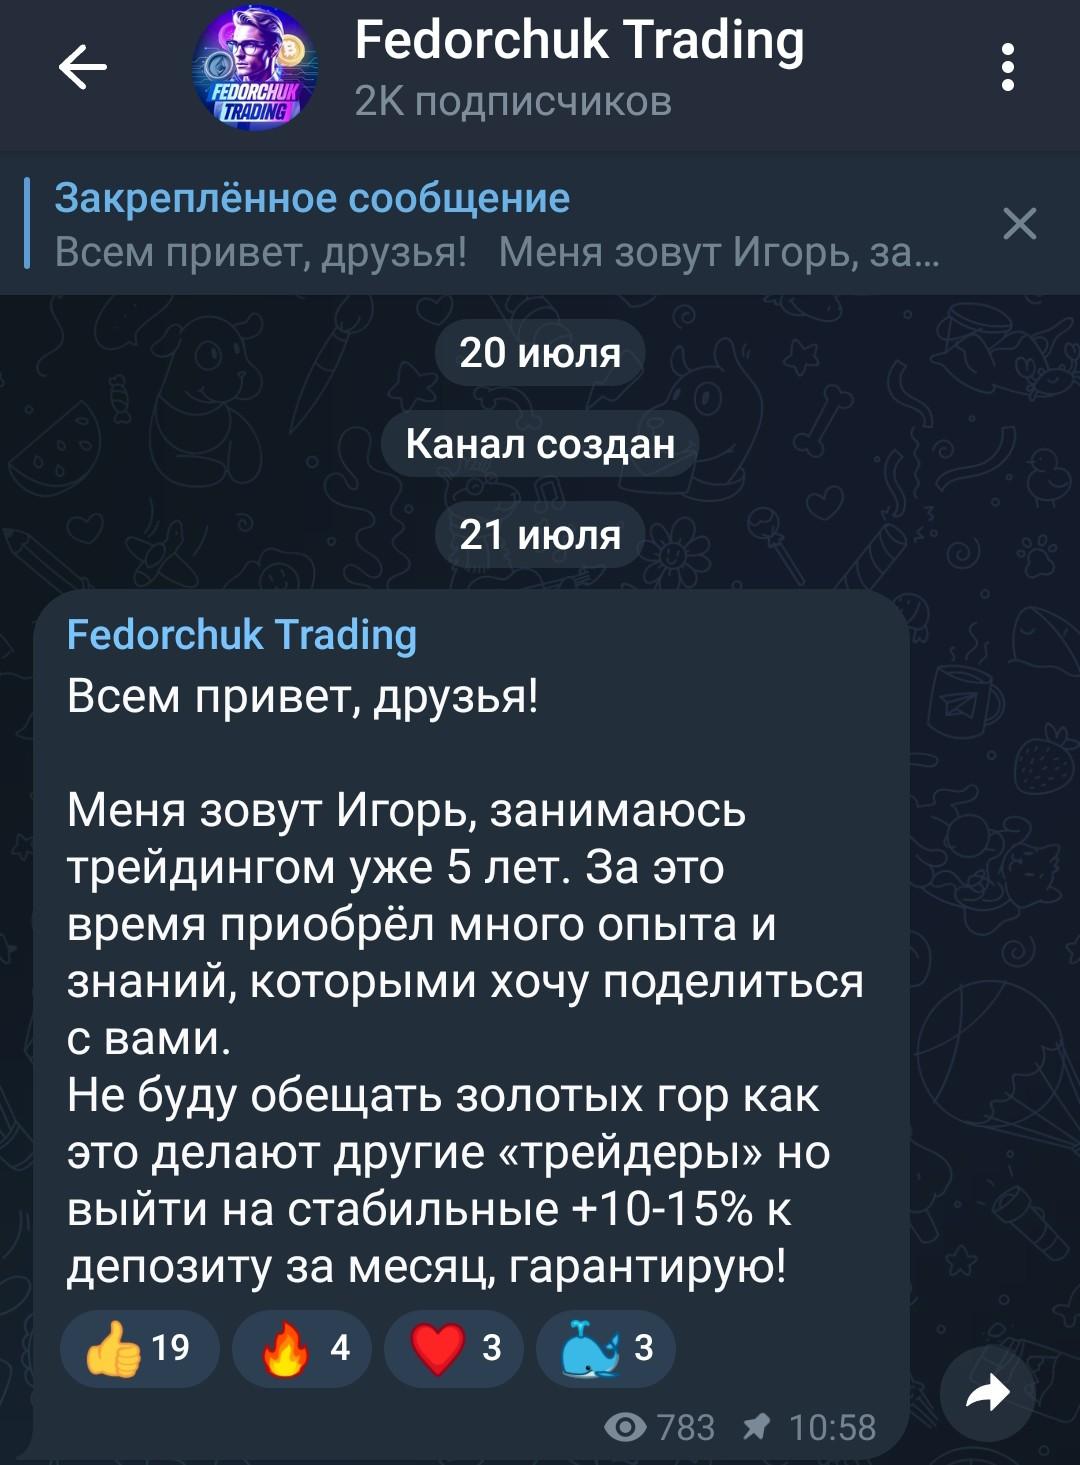 fedorchuk trading посты